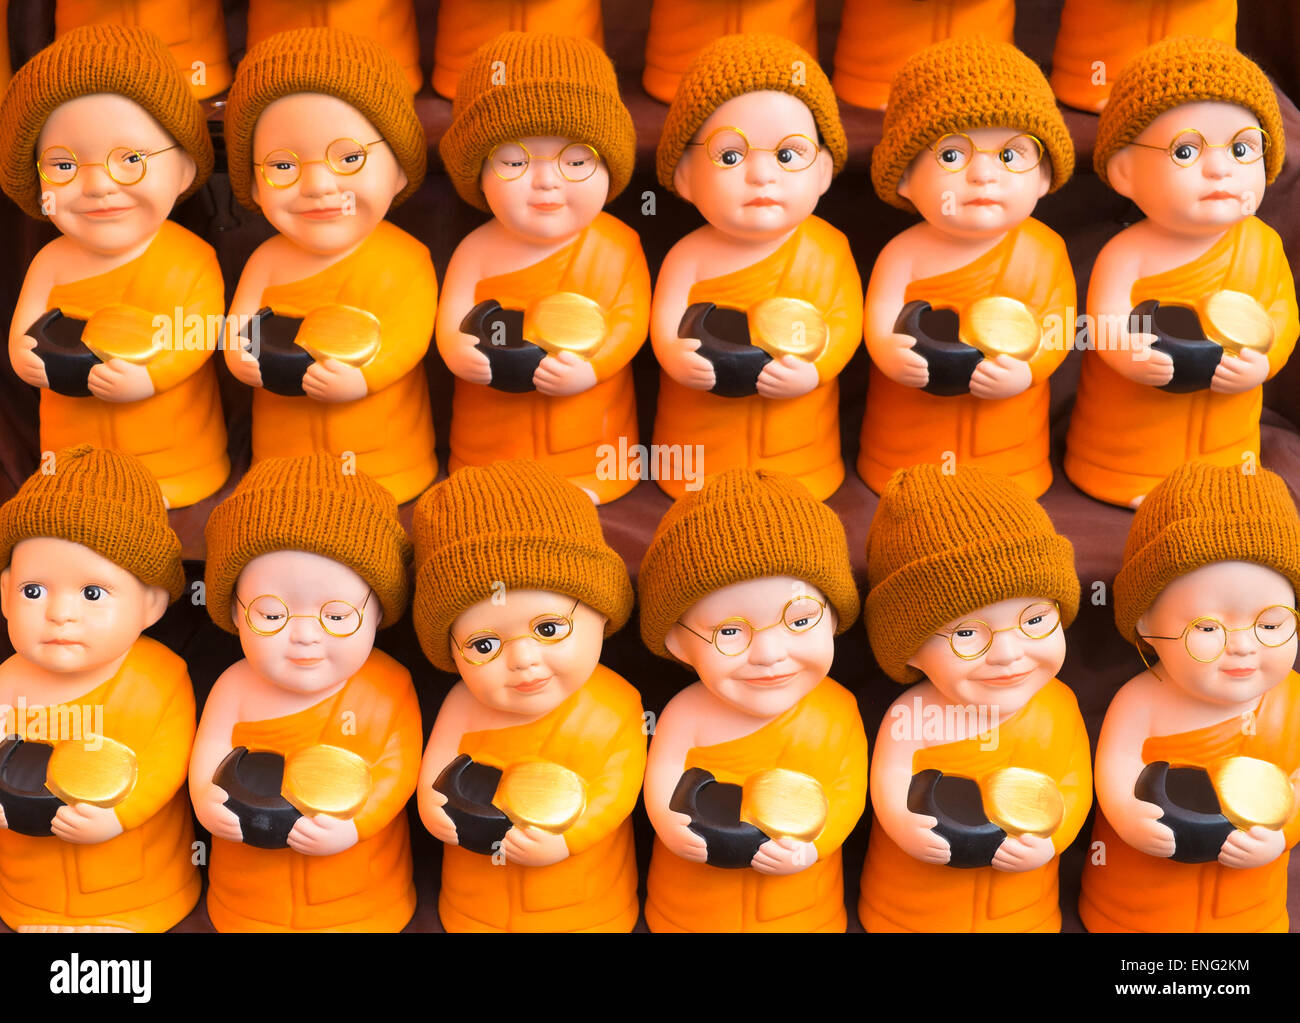 Close up of Buddhist monk dolls Stock Photo